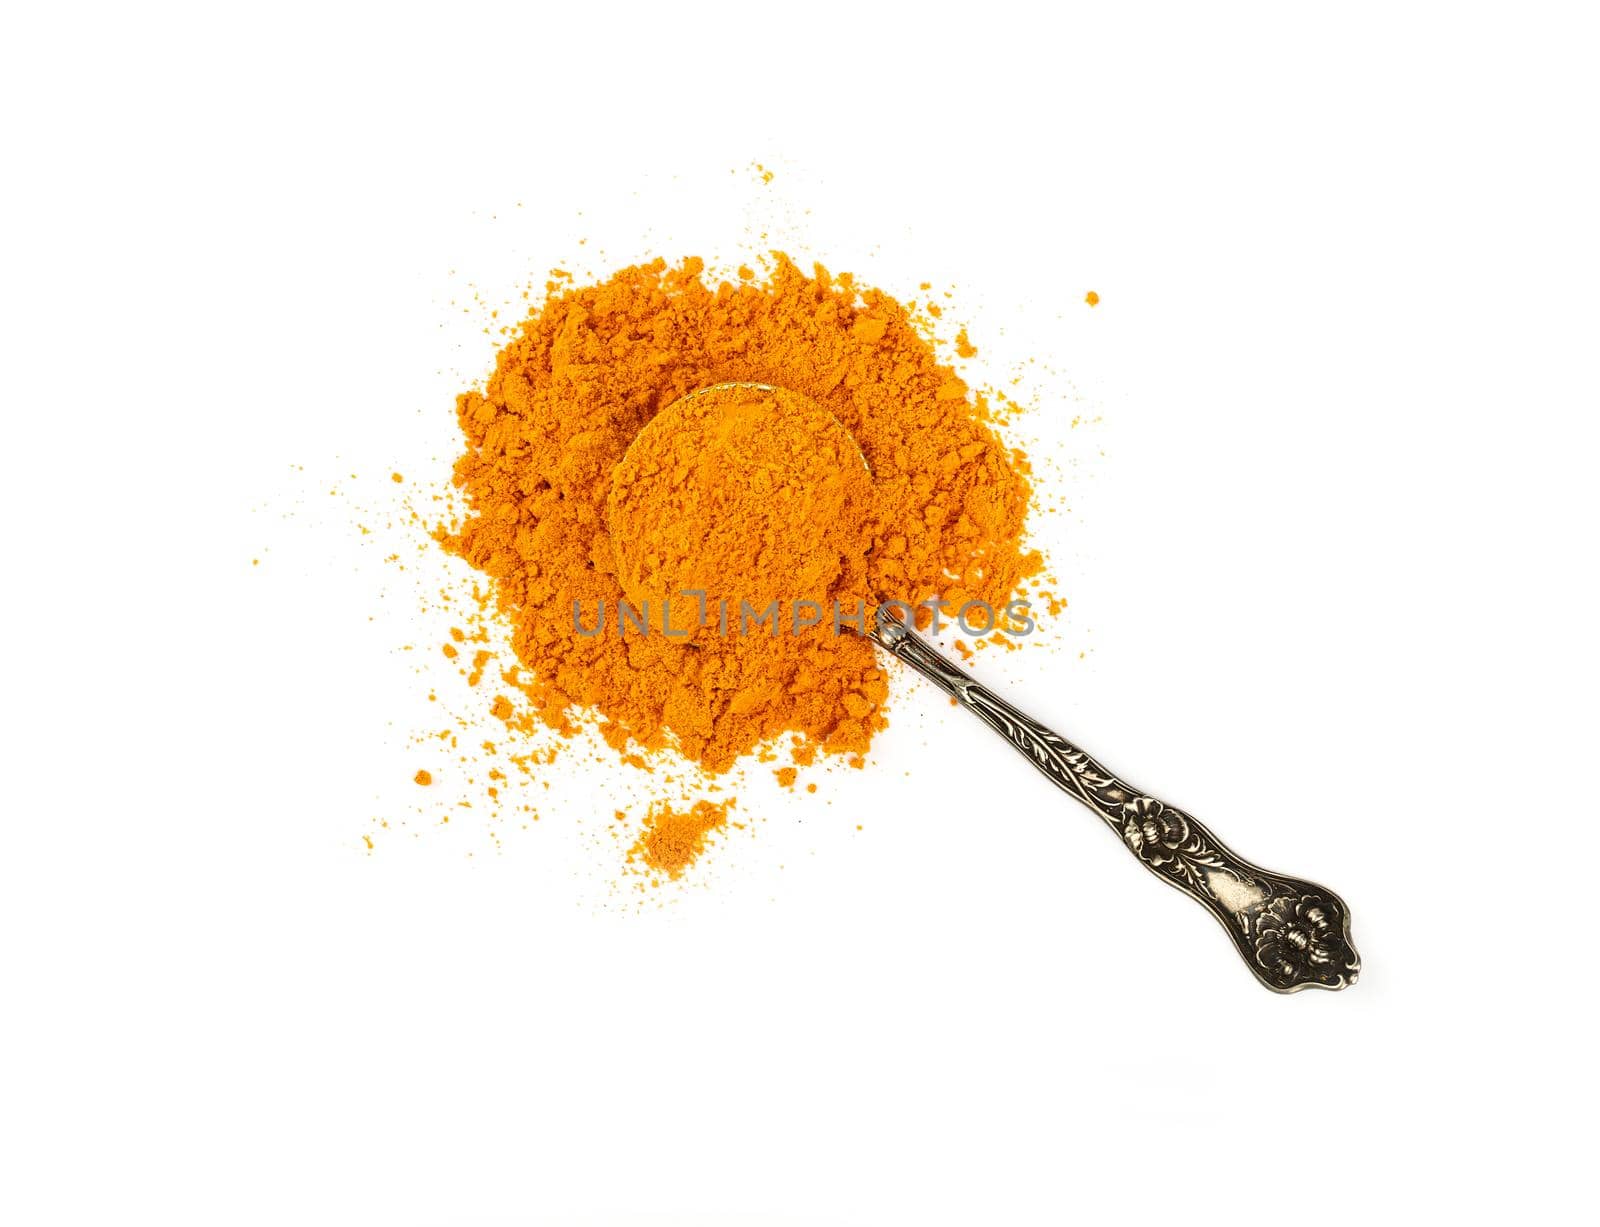 Metal spoon full of yellow turmeric powder by BreakingTheWalls